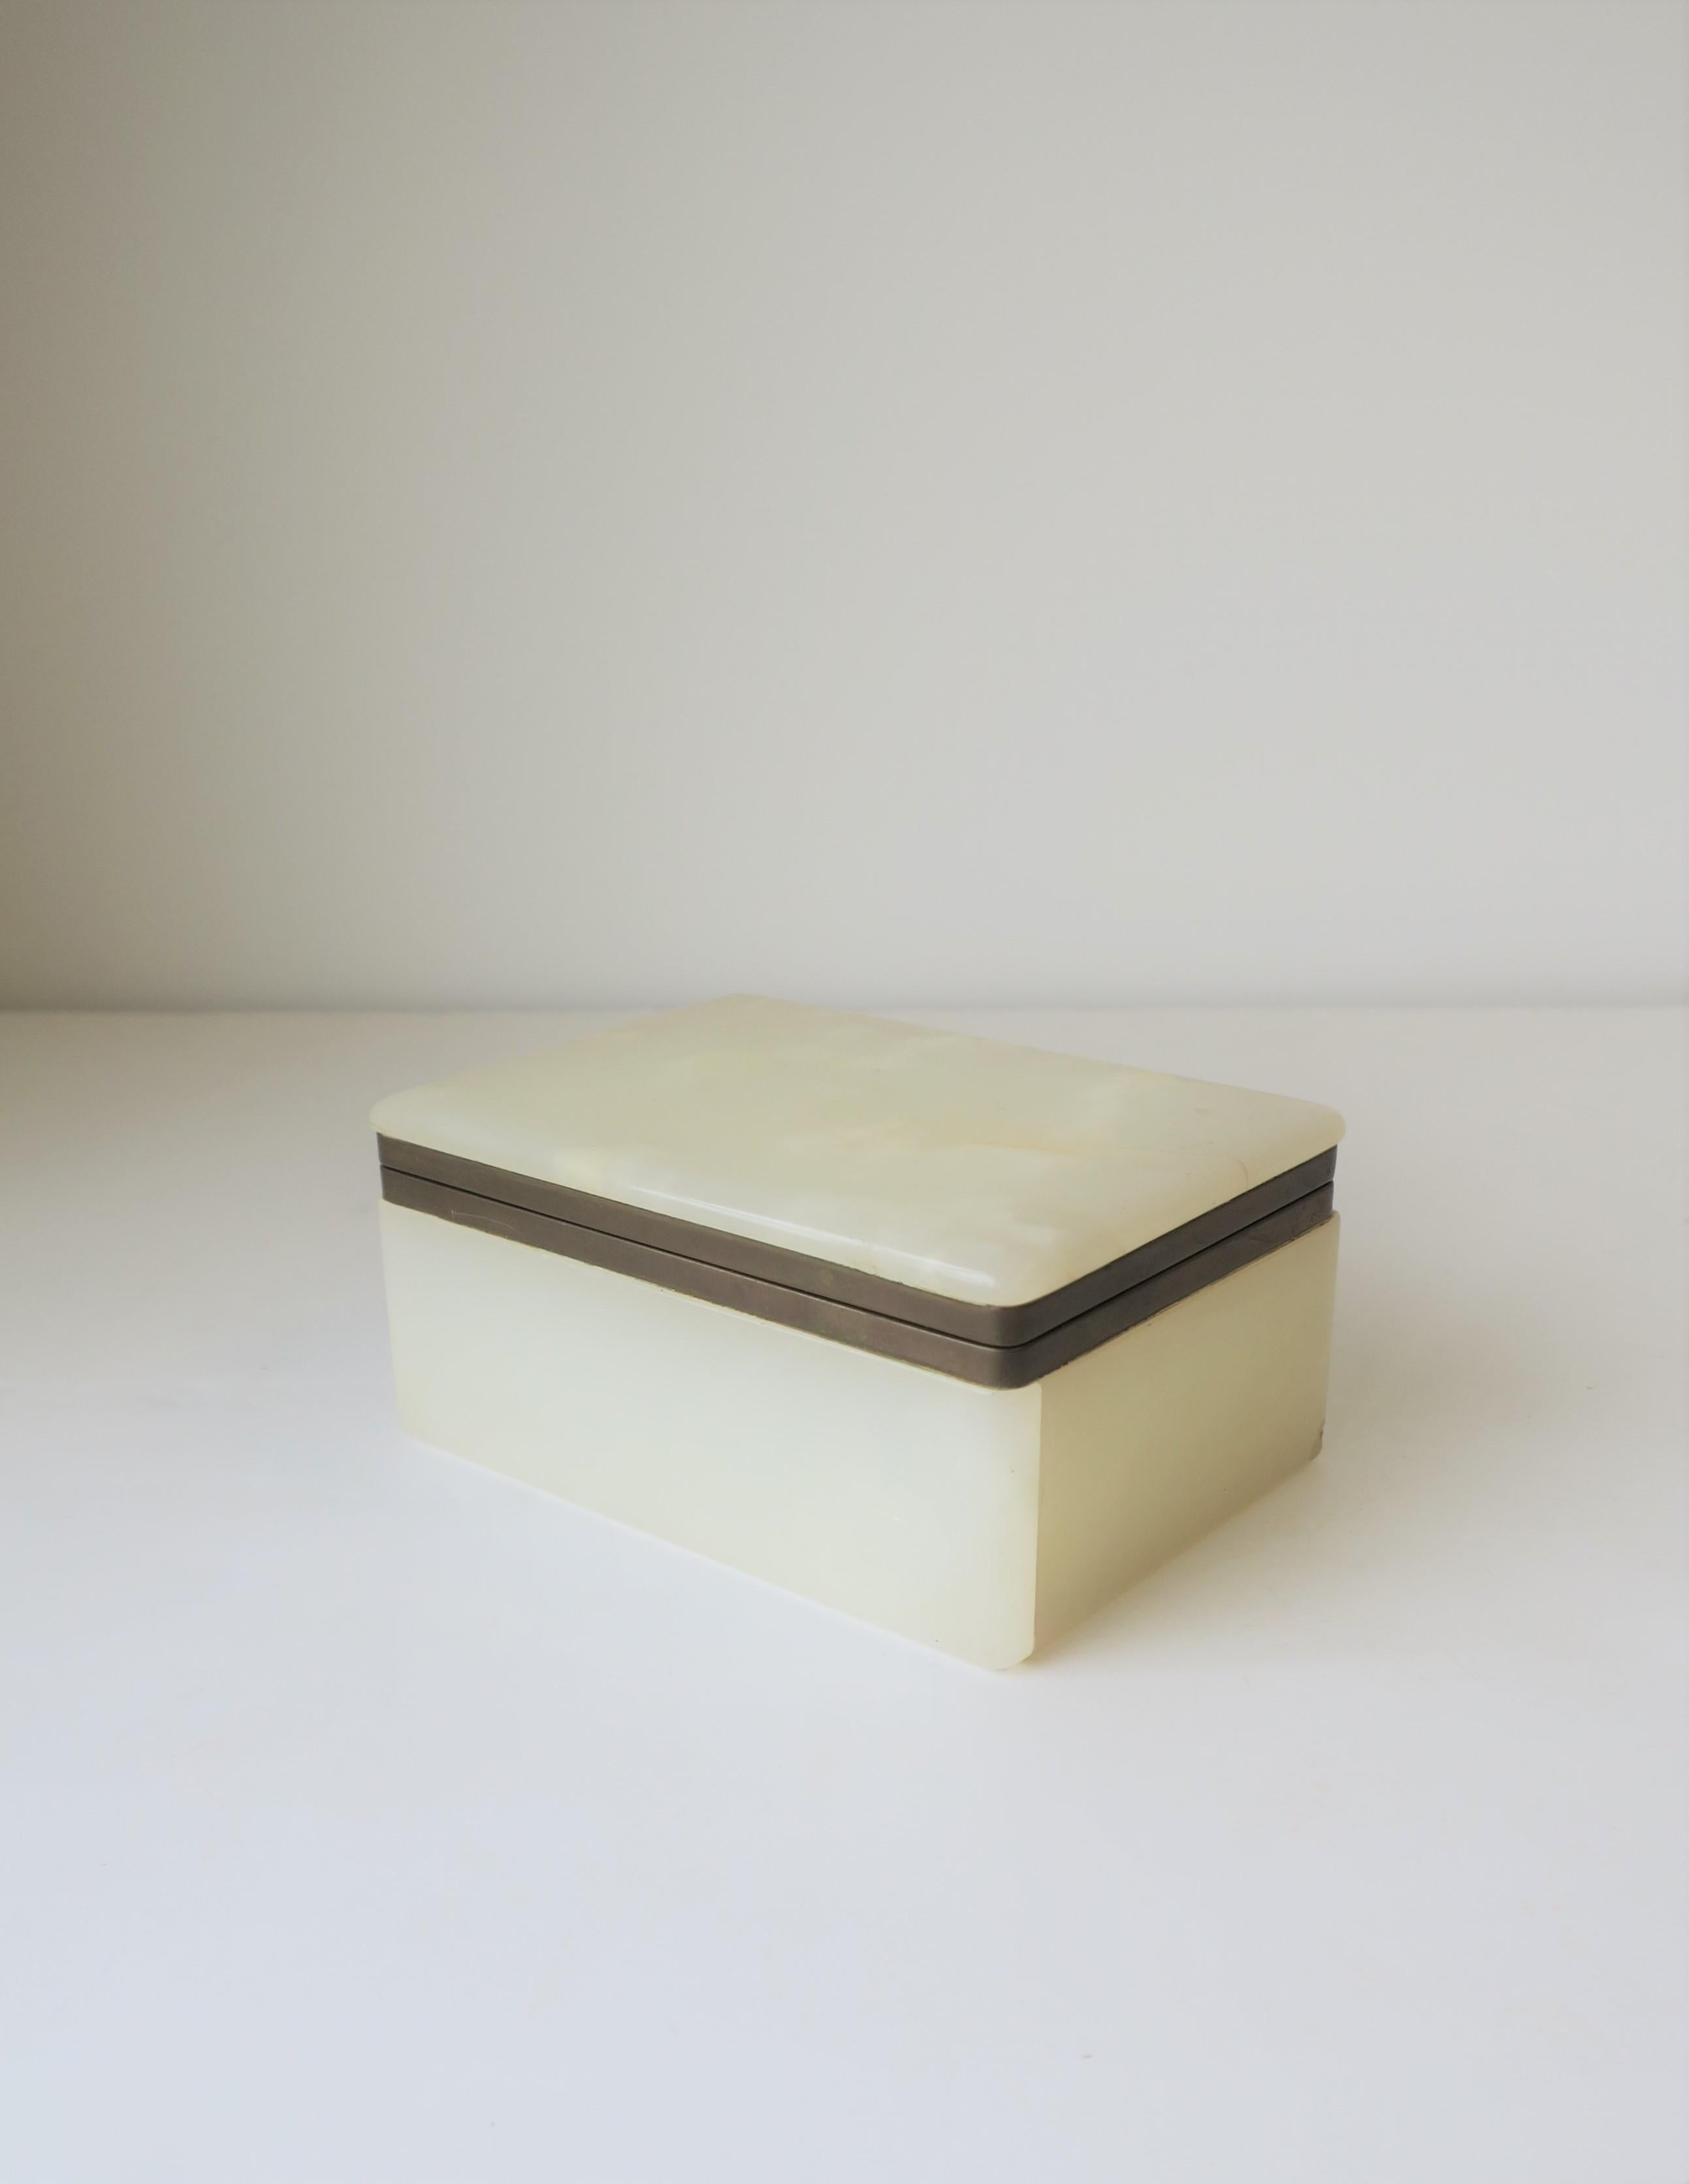 20th Century Modern White Onyx Marble and Brass Jewelry Box from Belgium